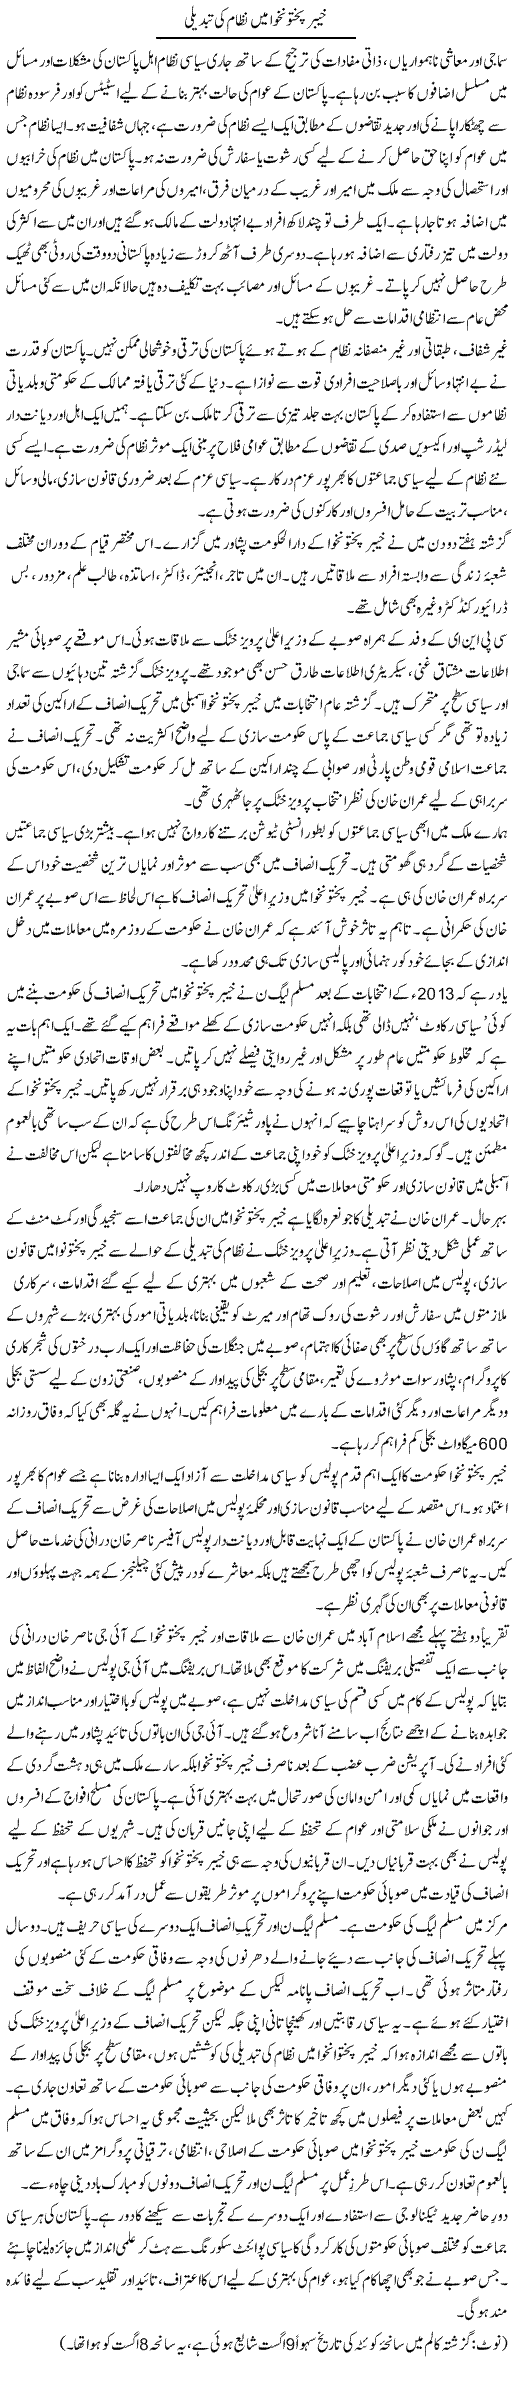 Khyber Pakhtunkhwa Mein Nizam Ki Tabdeeli | Dr. Waqar Yousuf Azeemi | Daily Urdu Columns